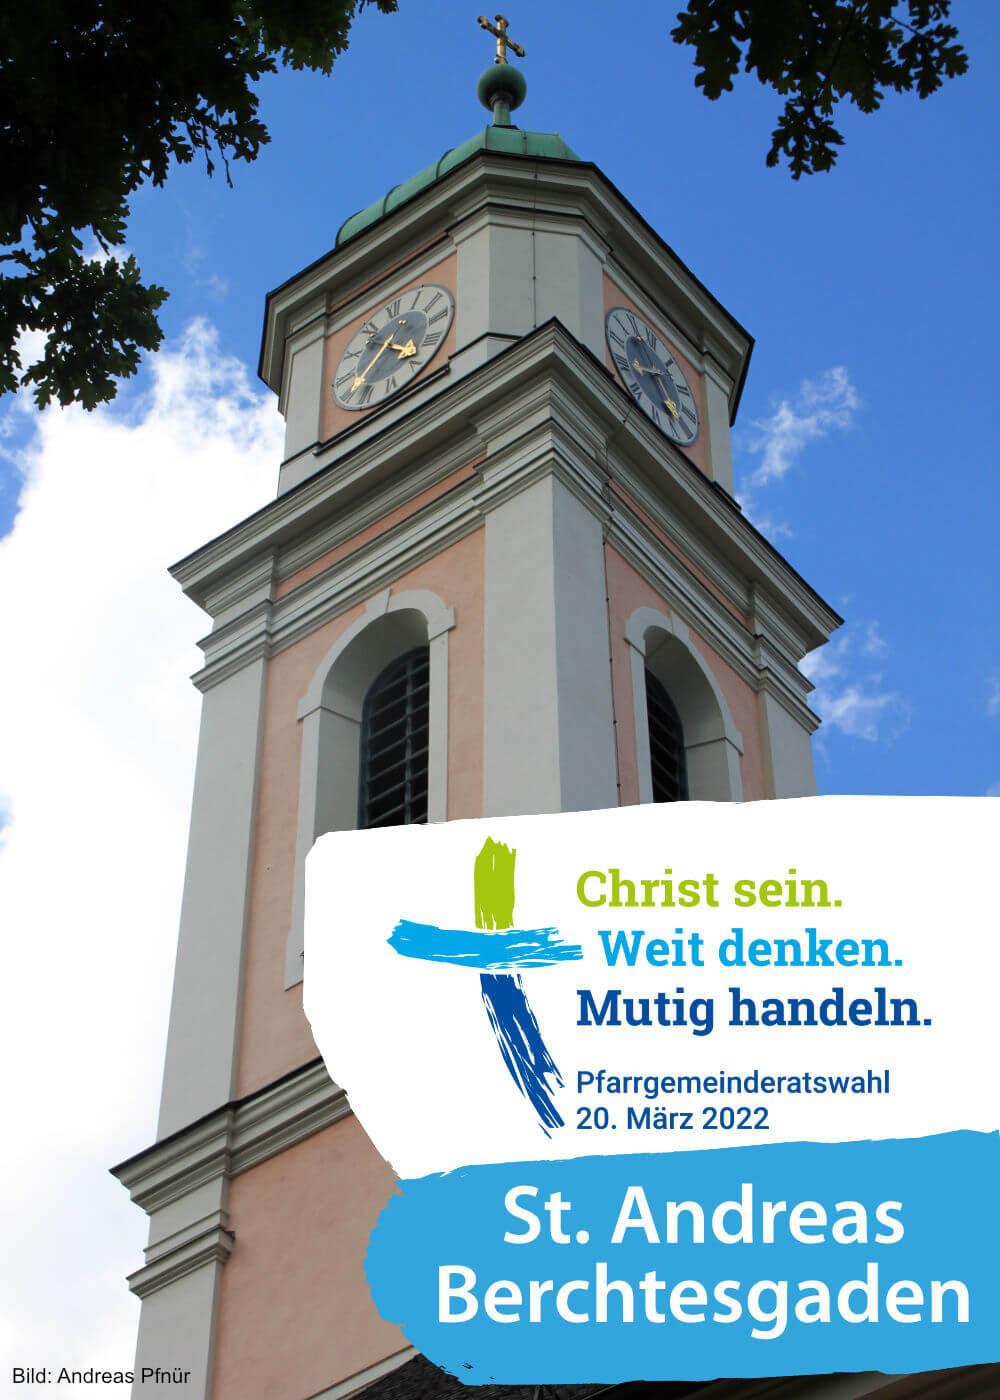 St. Andreas Berchtesgaden